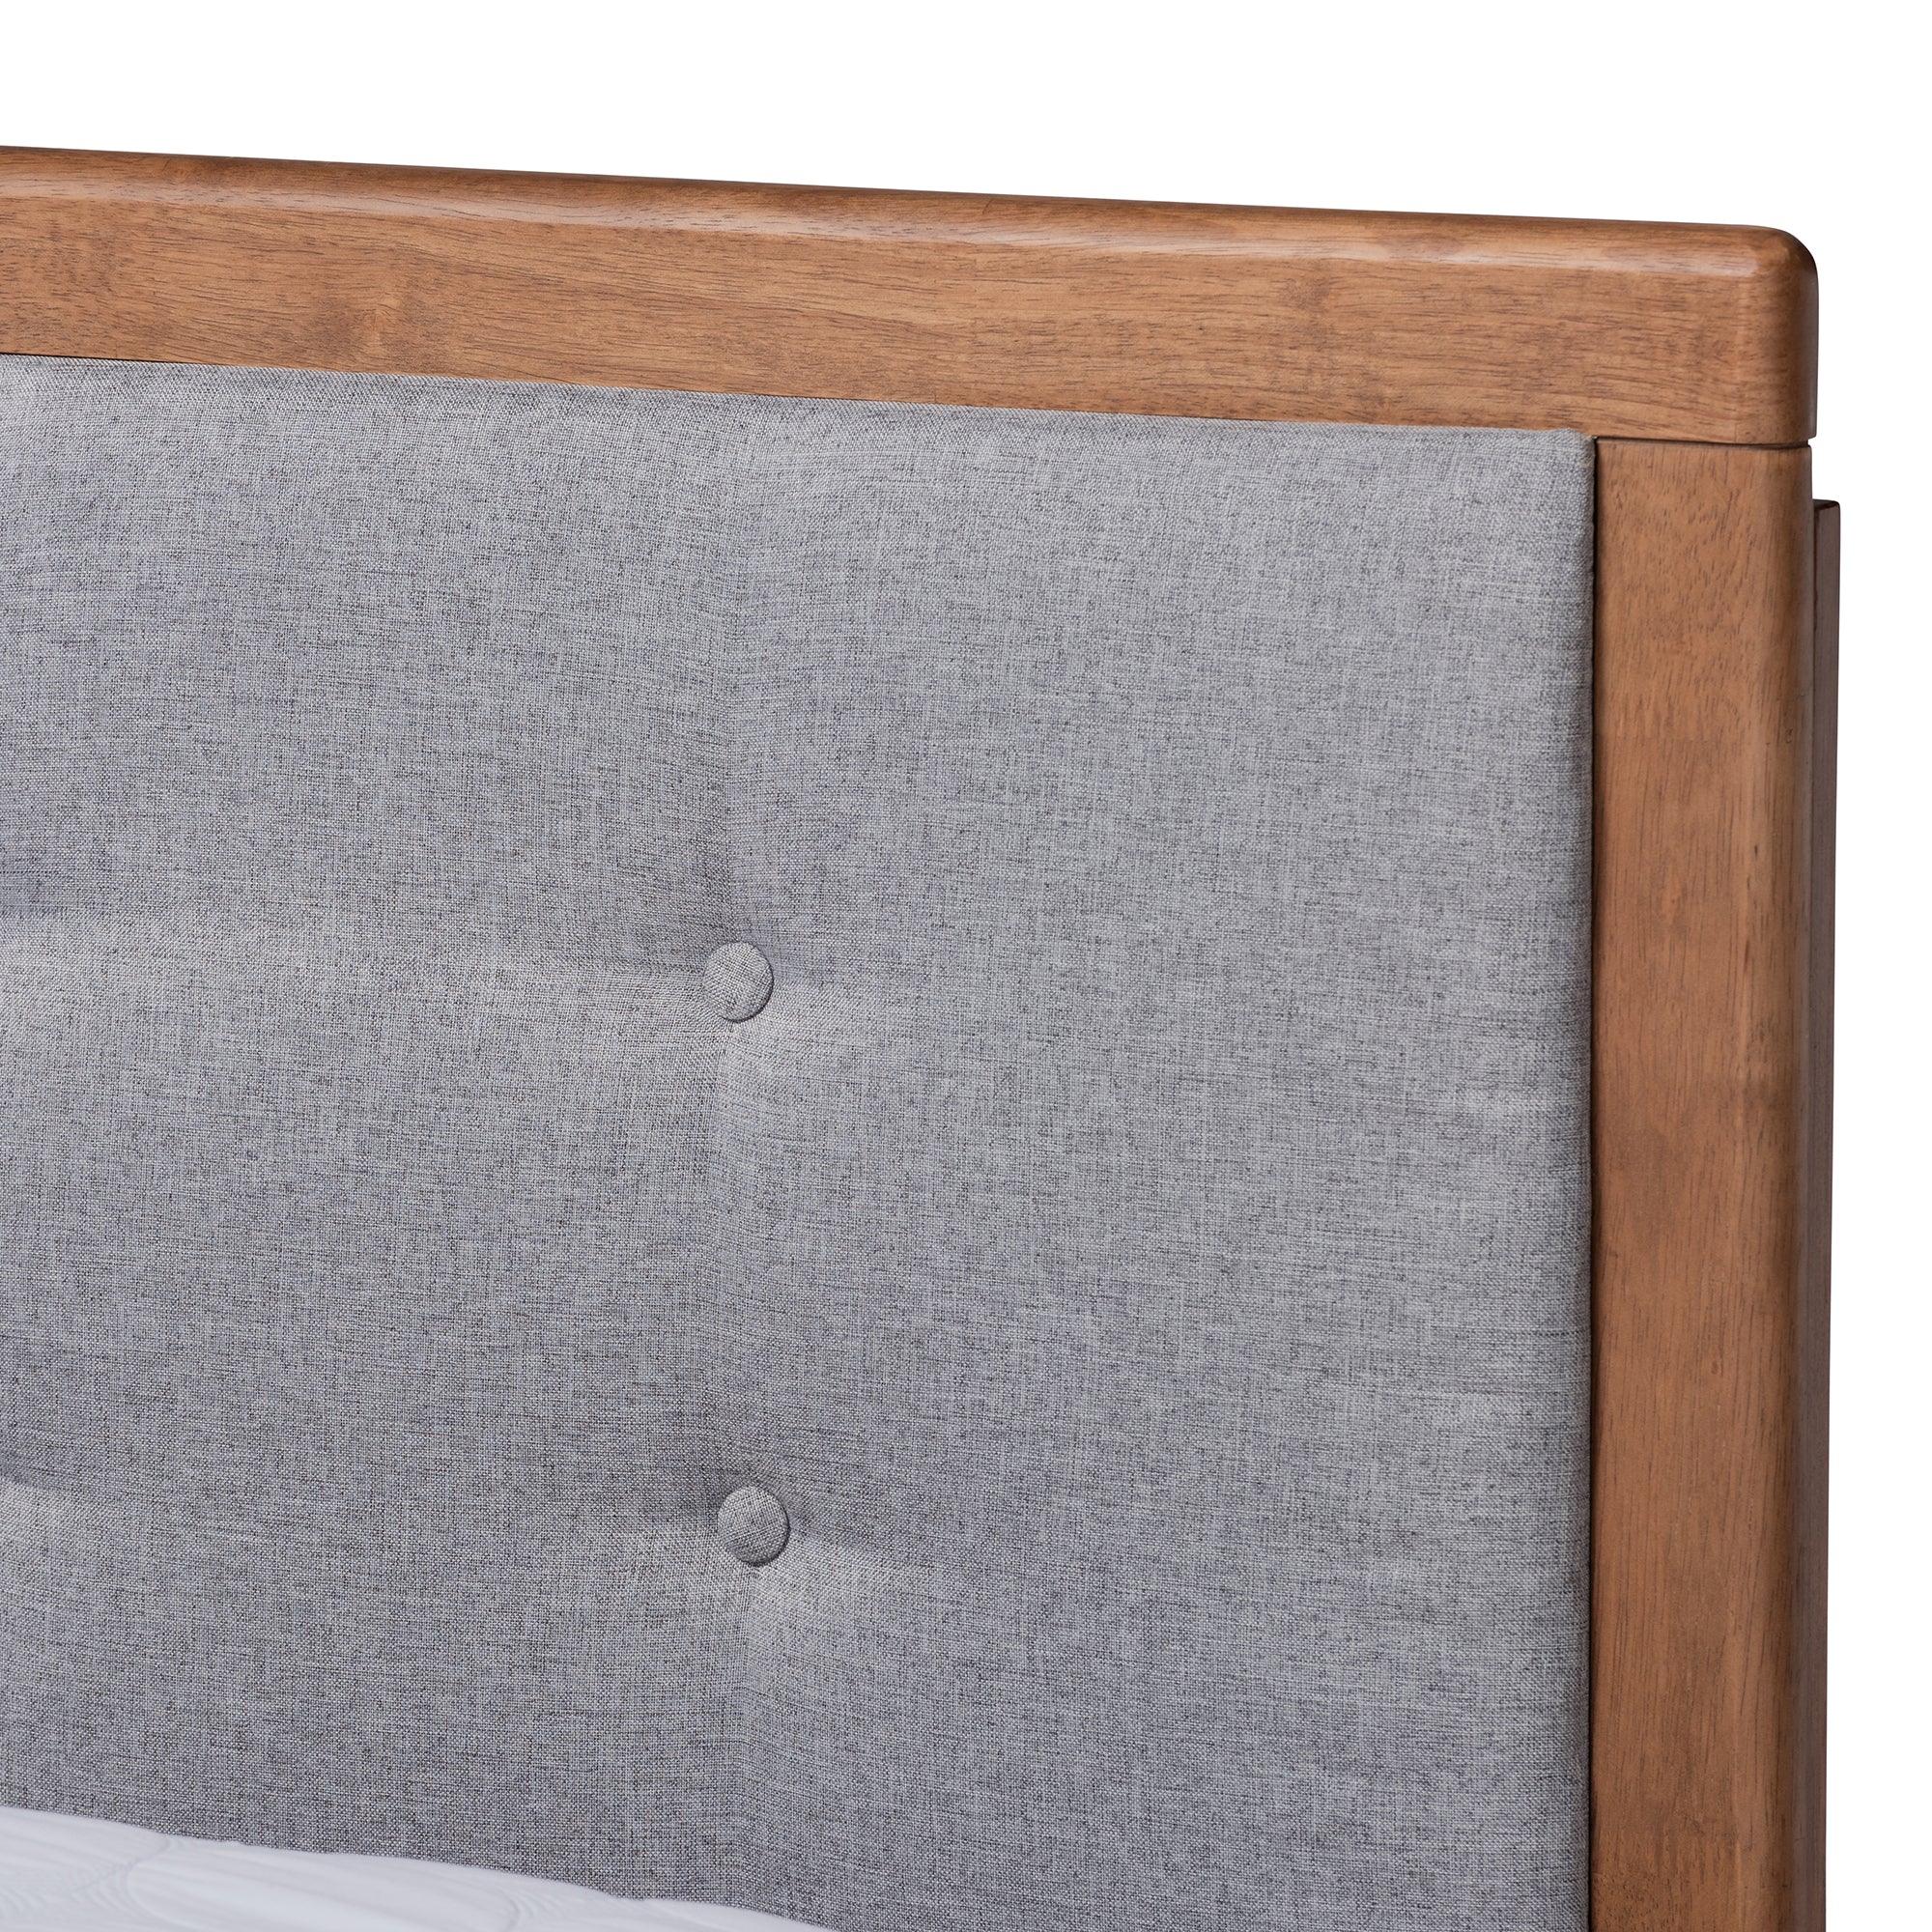 Viviana Modern Bed-Bed-Baxton Studio - WI-Wall2Wall Furnishings